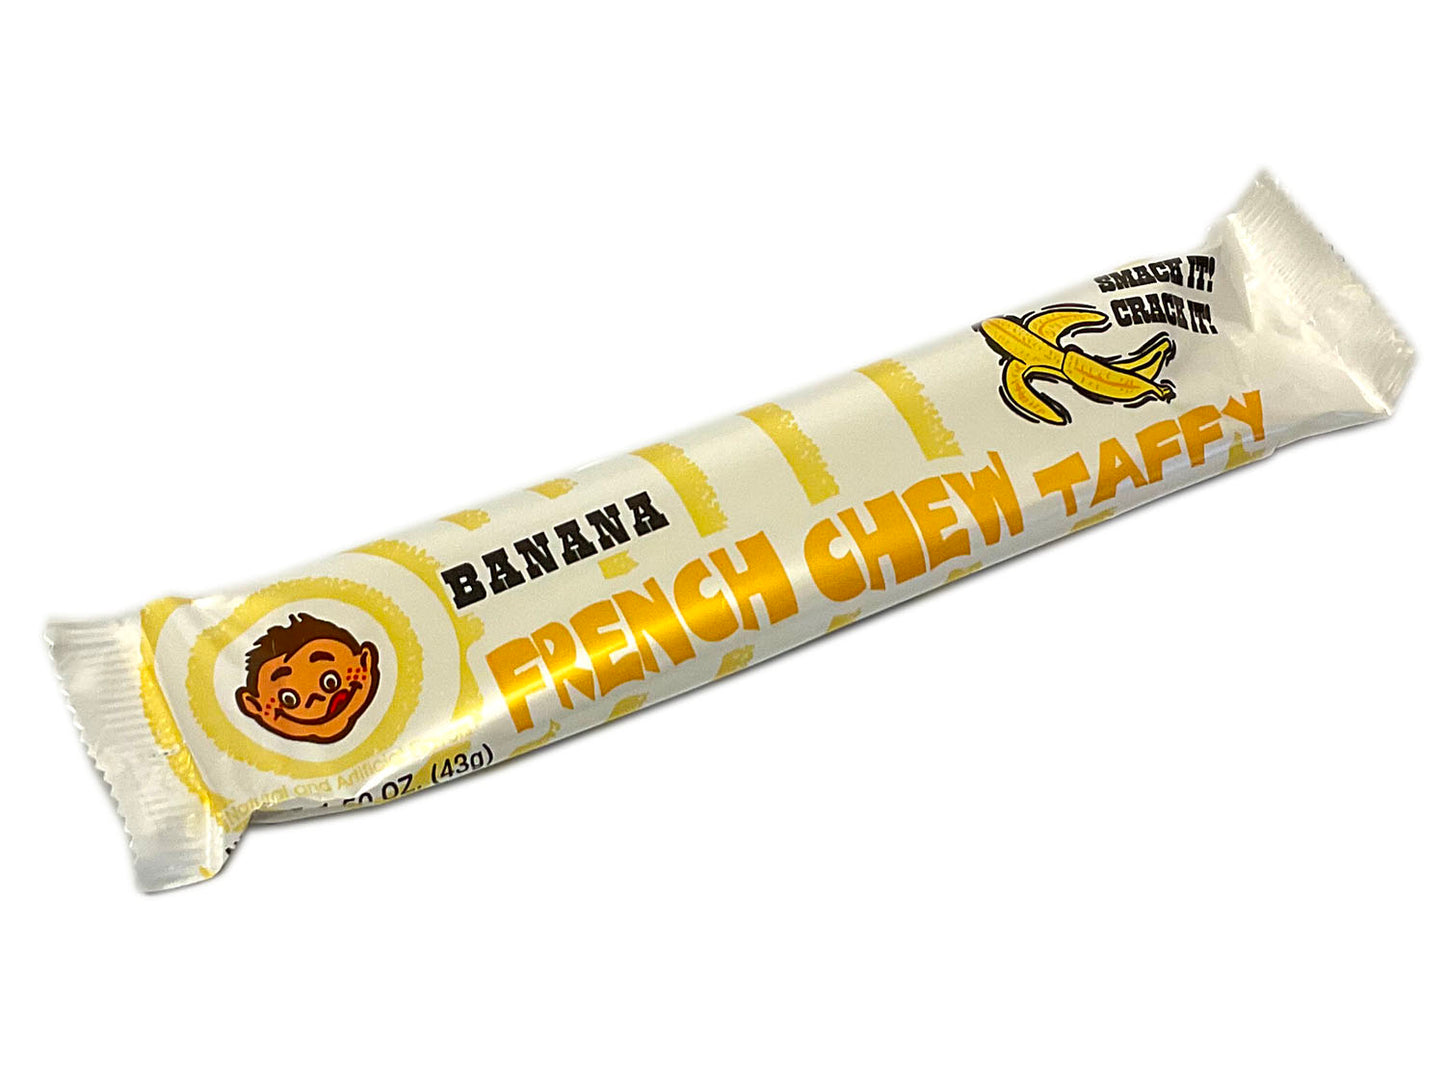 French Chew Taffy - 1.62 oz bar - banana